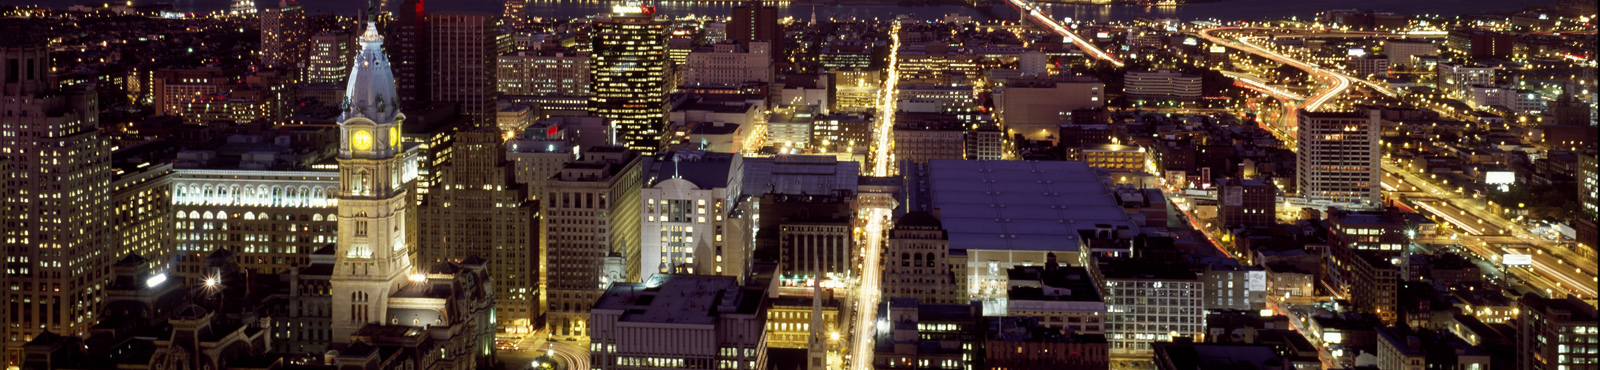 aerial view of Philadelphia